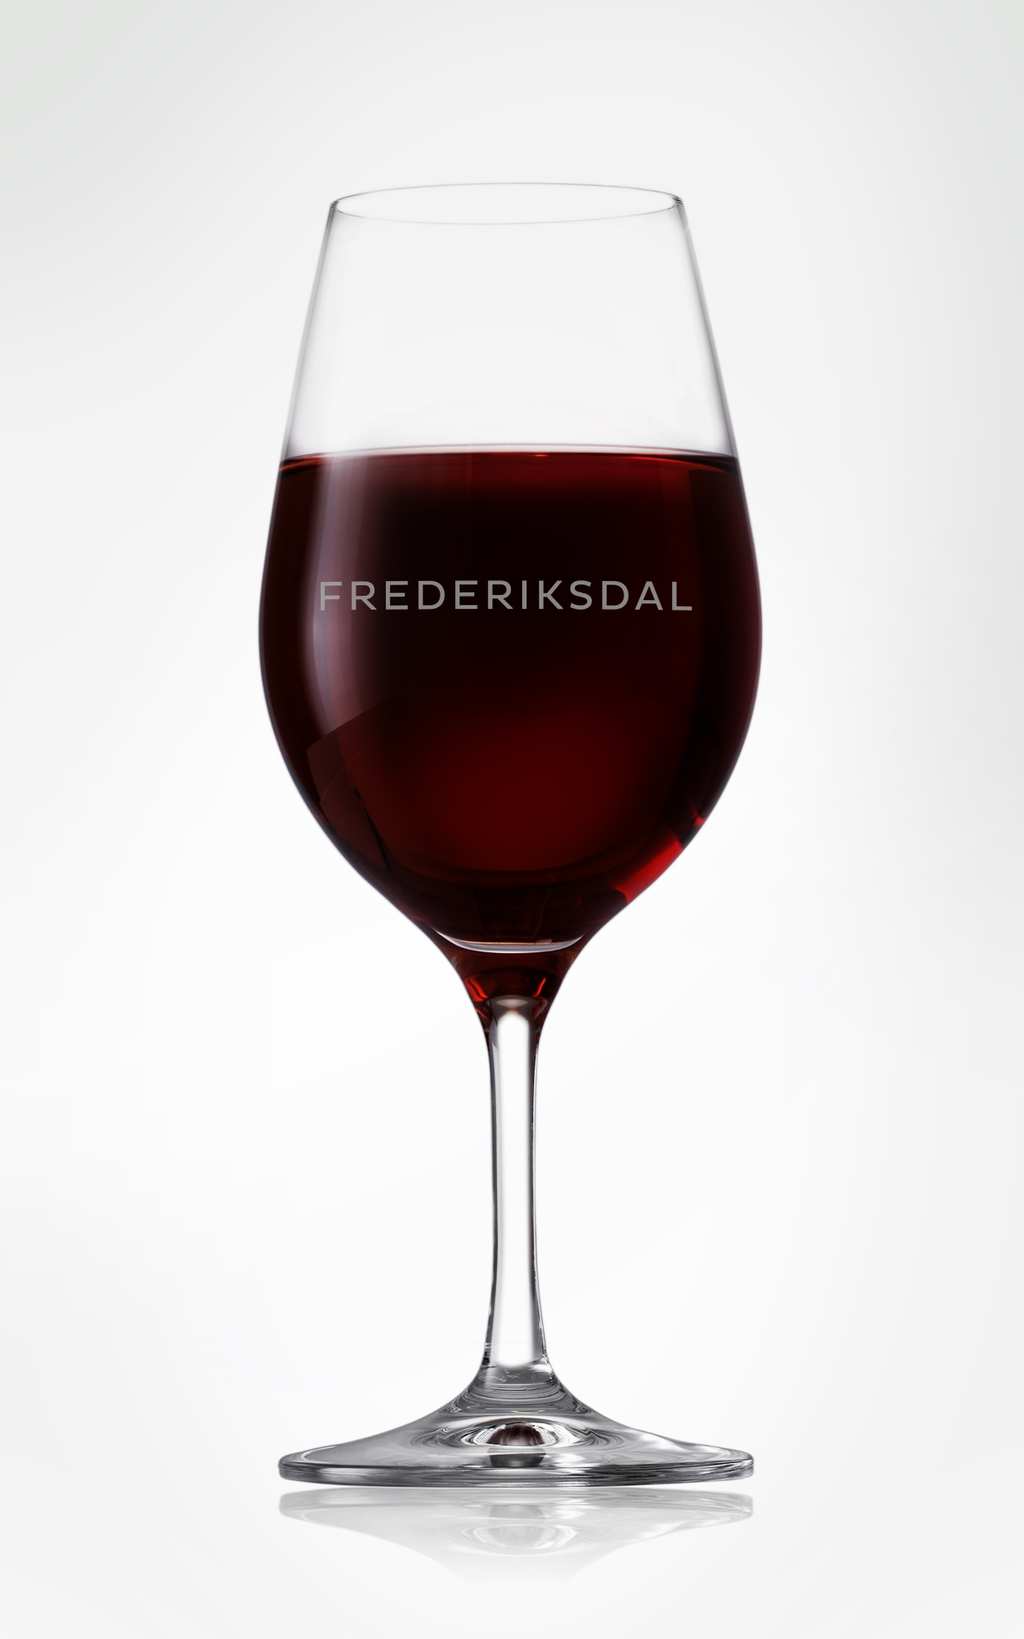 Riedel krystalglas med Frederiksdal logo